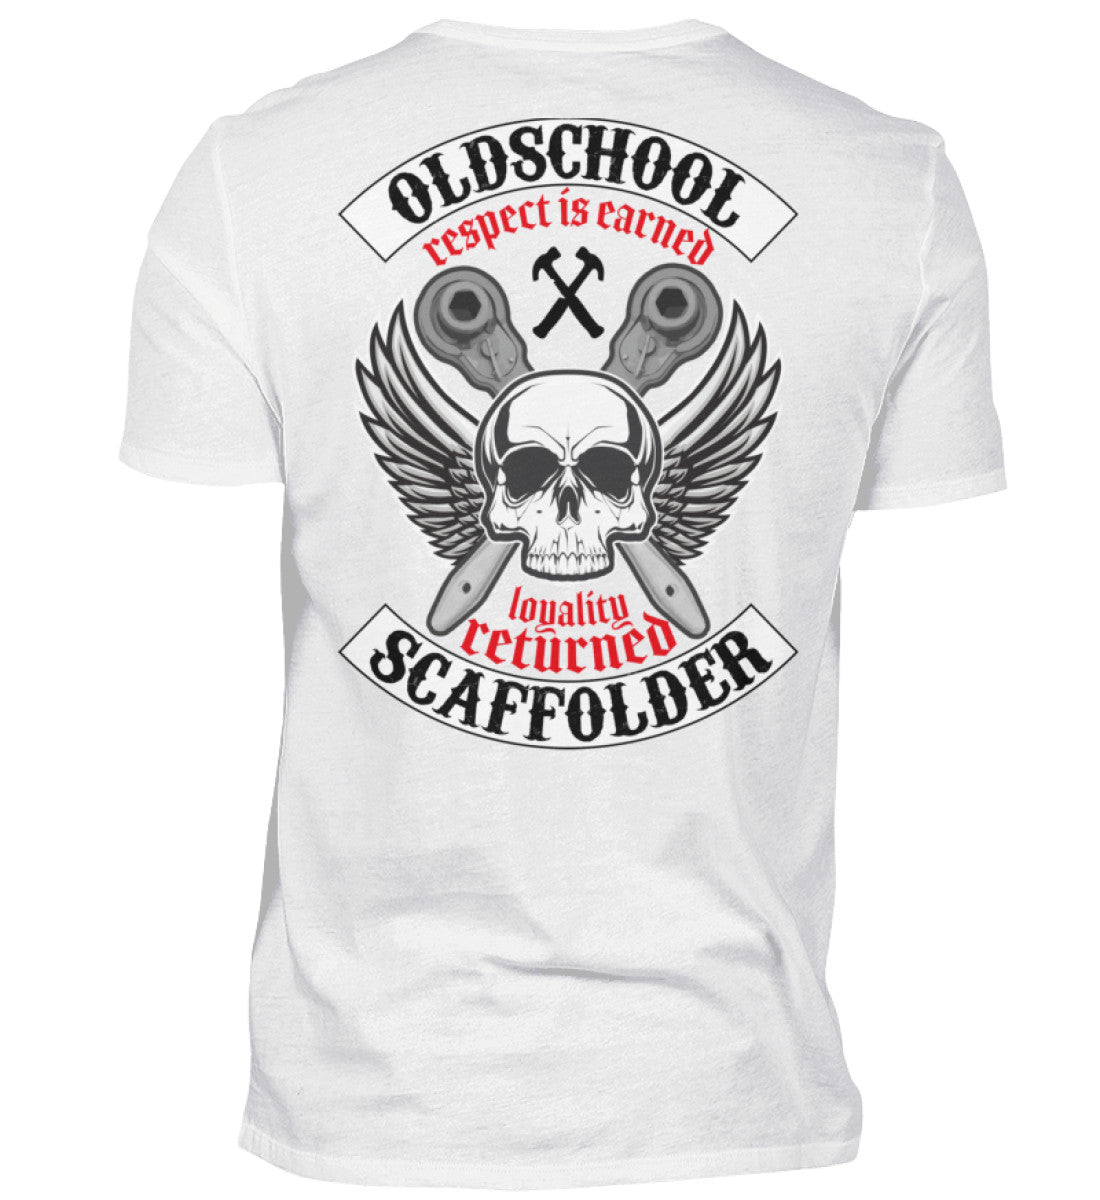 Gerüstbauer T-Shirt / Oldschool Scaffolder / Respect €24.95 Gerüstbauer - Shop >>